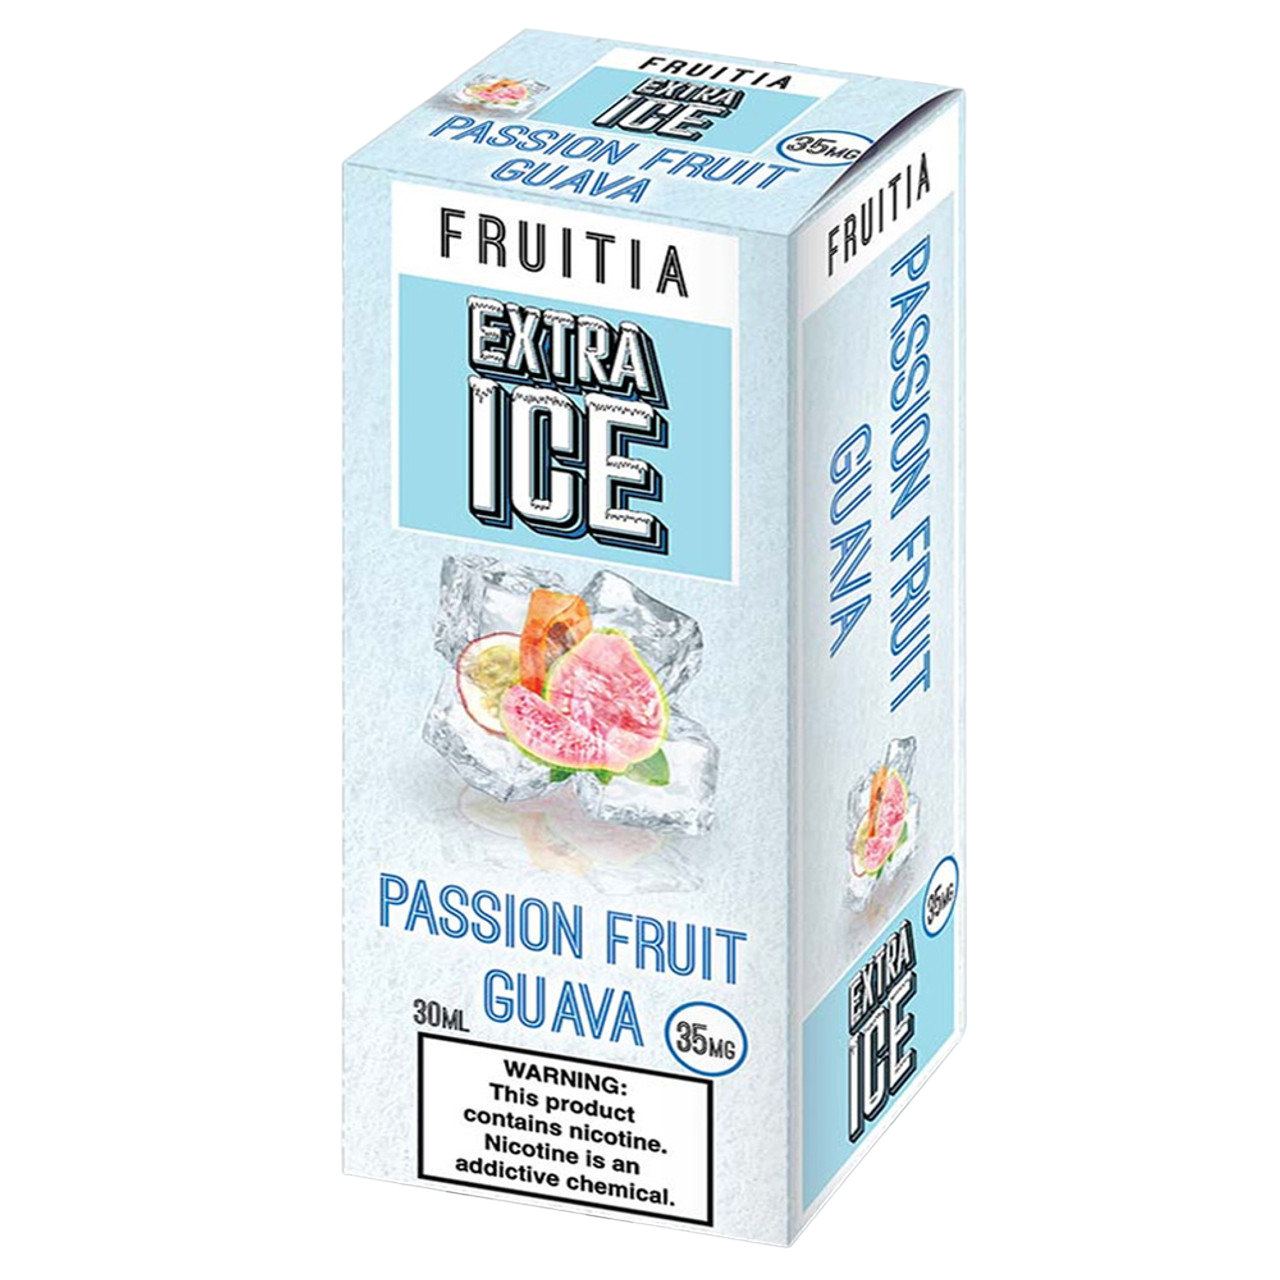 Fruitia Extra Ice Nicotine Salt E-Liquid 30ML - Passion Fruit Guava